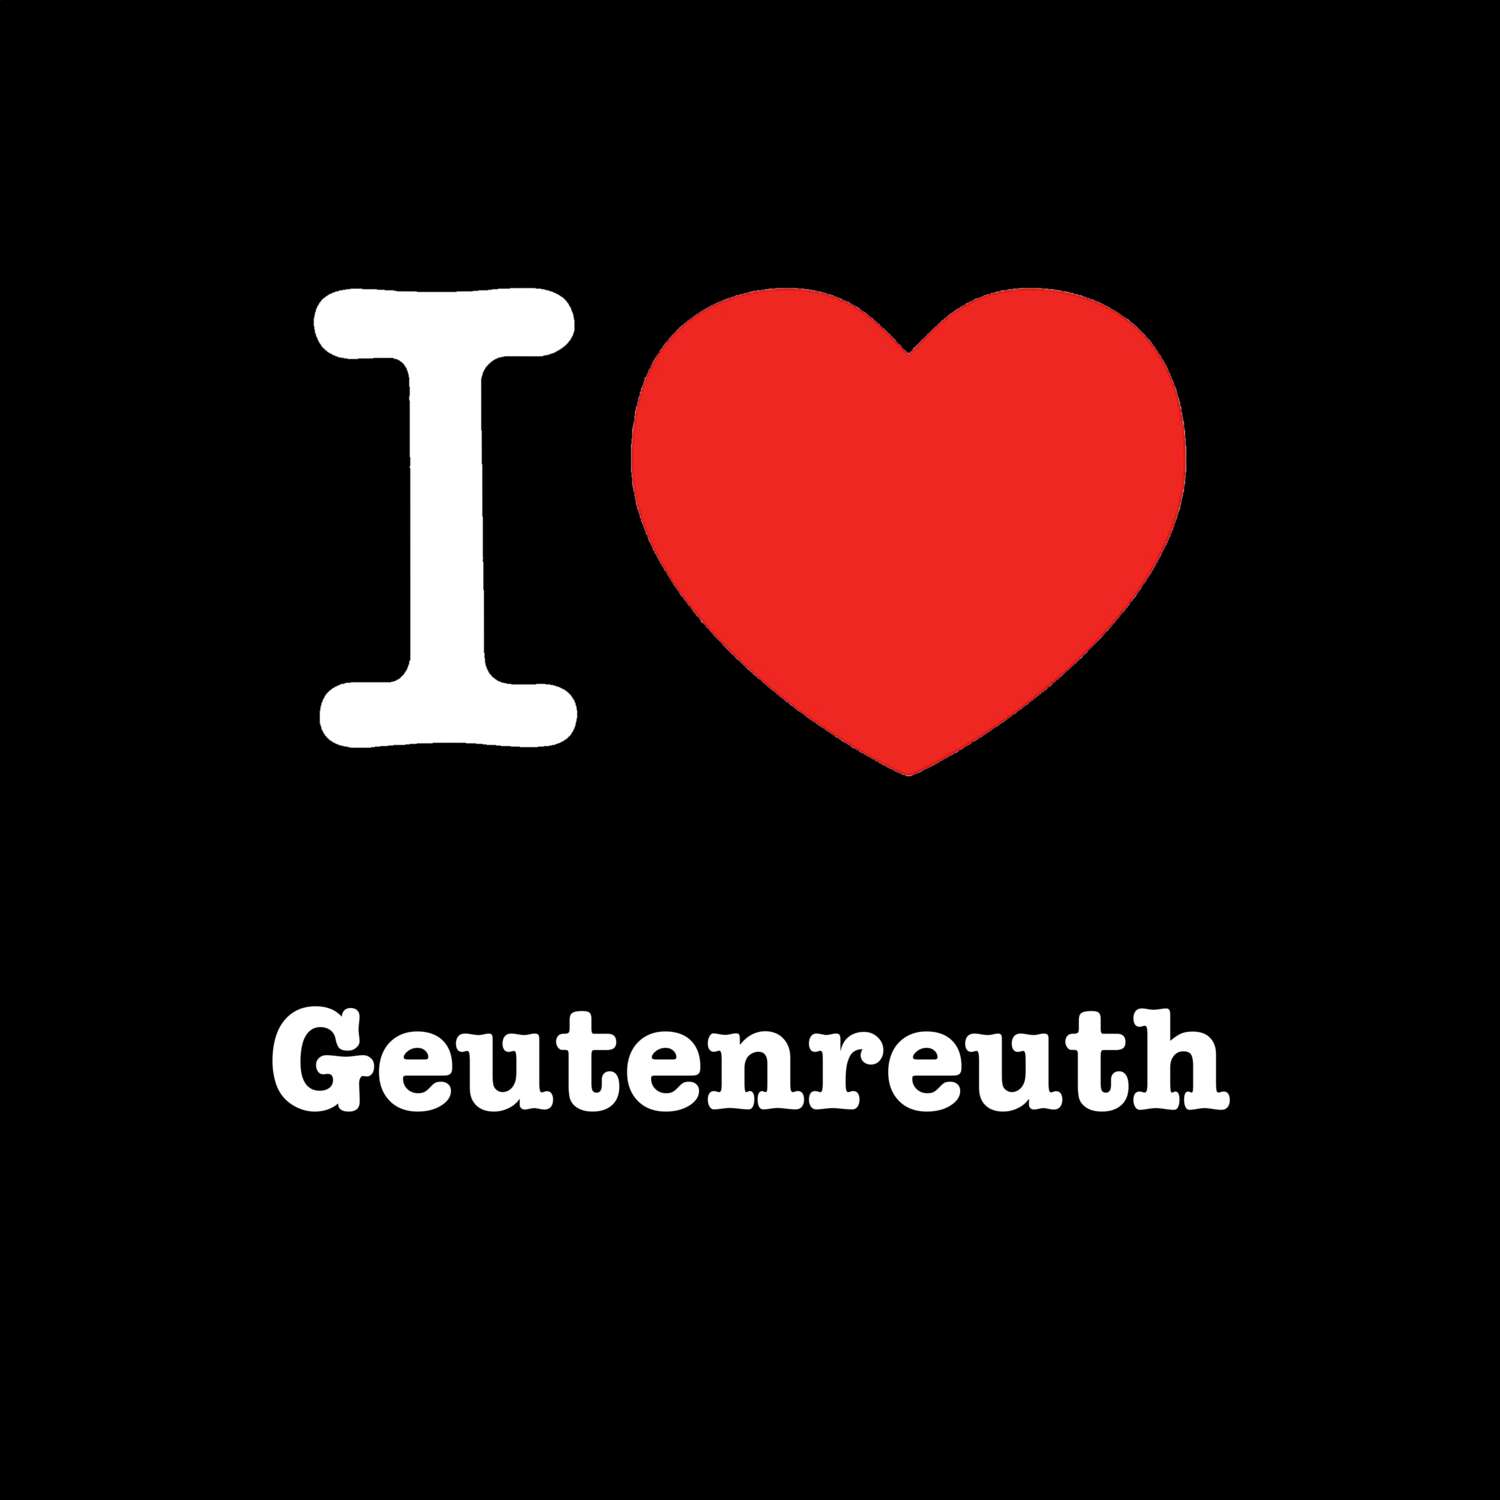 Geutenreuth T-Shirt »I love«